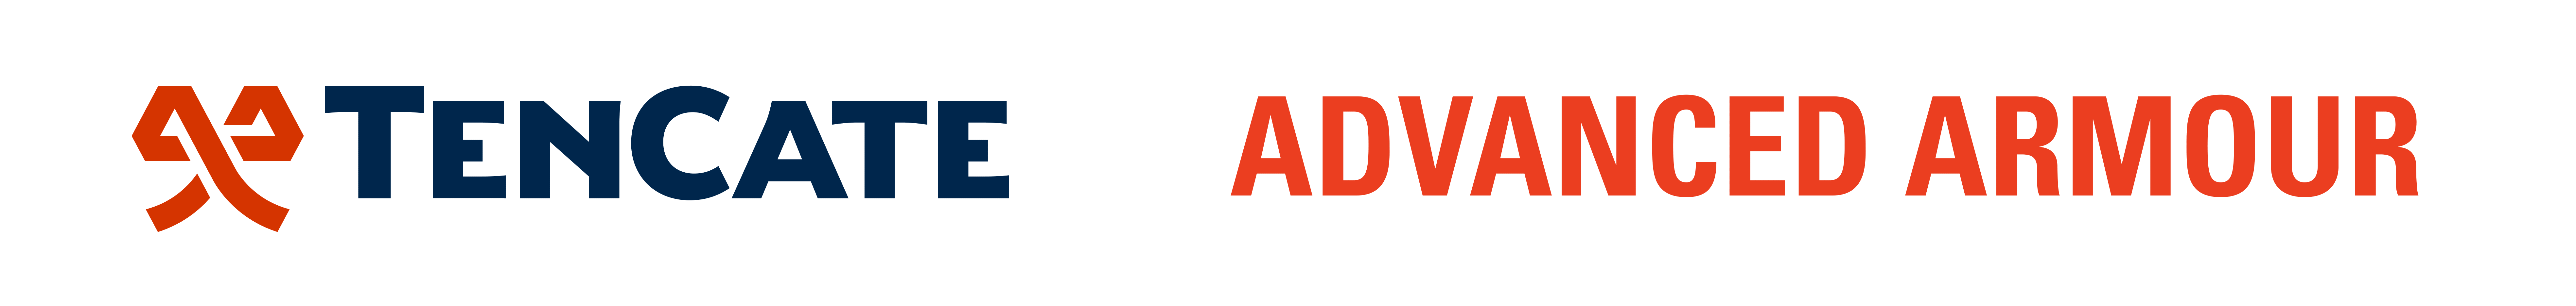 Tencate Advanced Armour logo